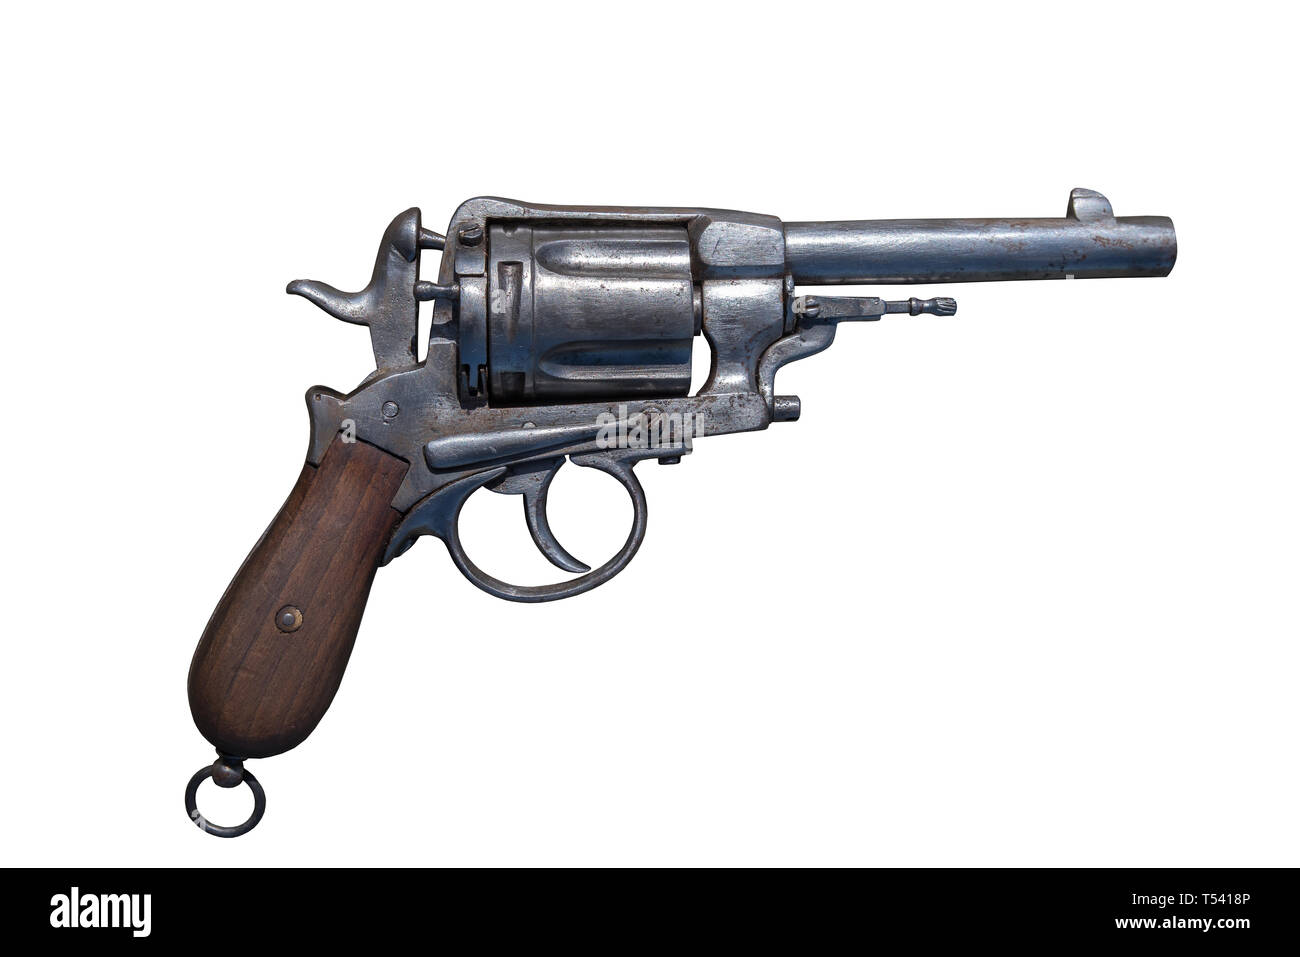 Pistole Revolver. Antike Feuerwaffe. Stockfoto